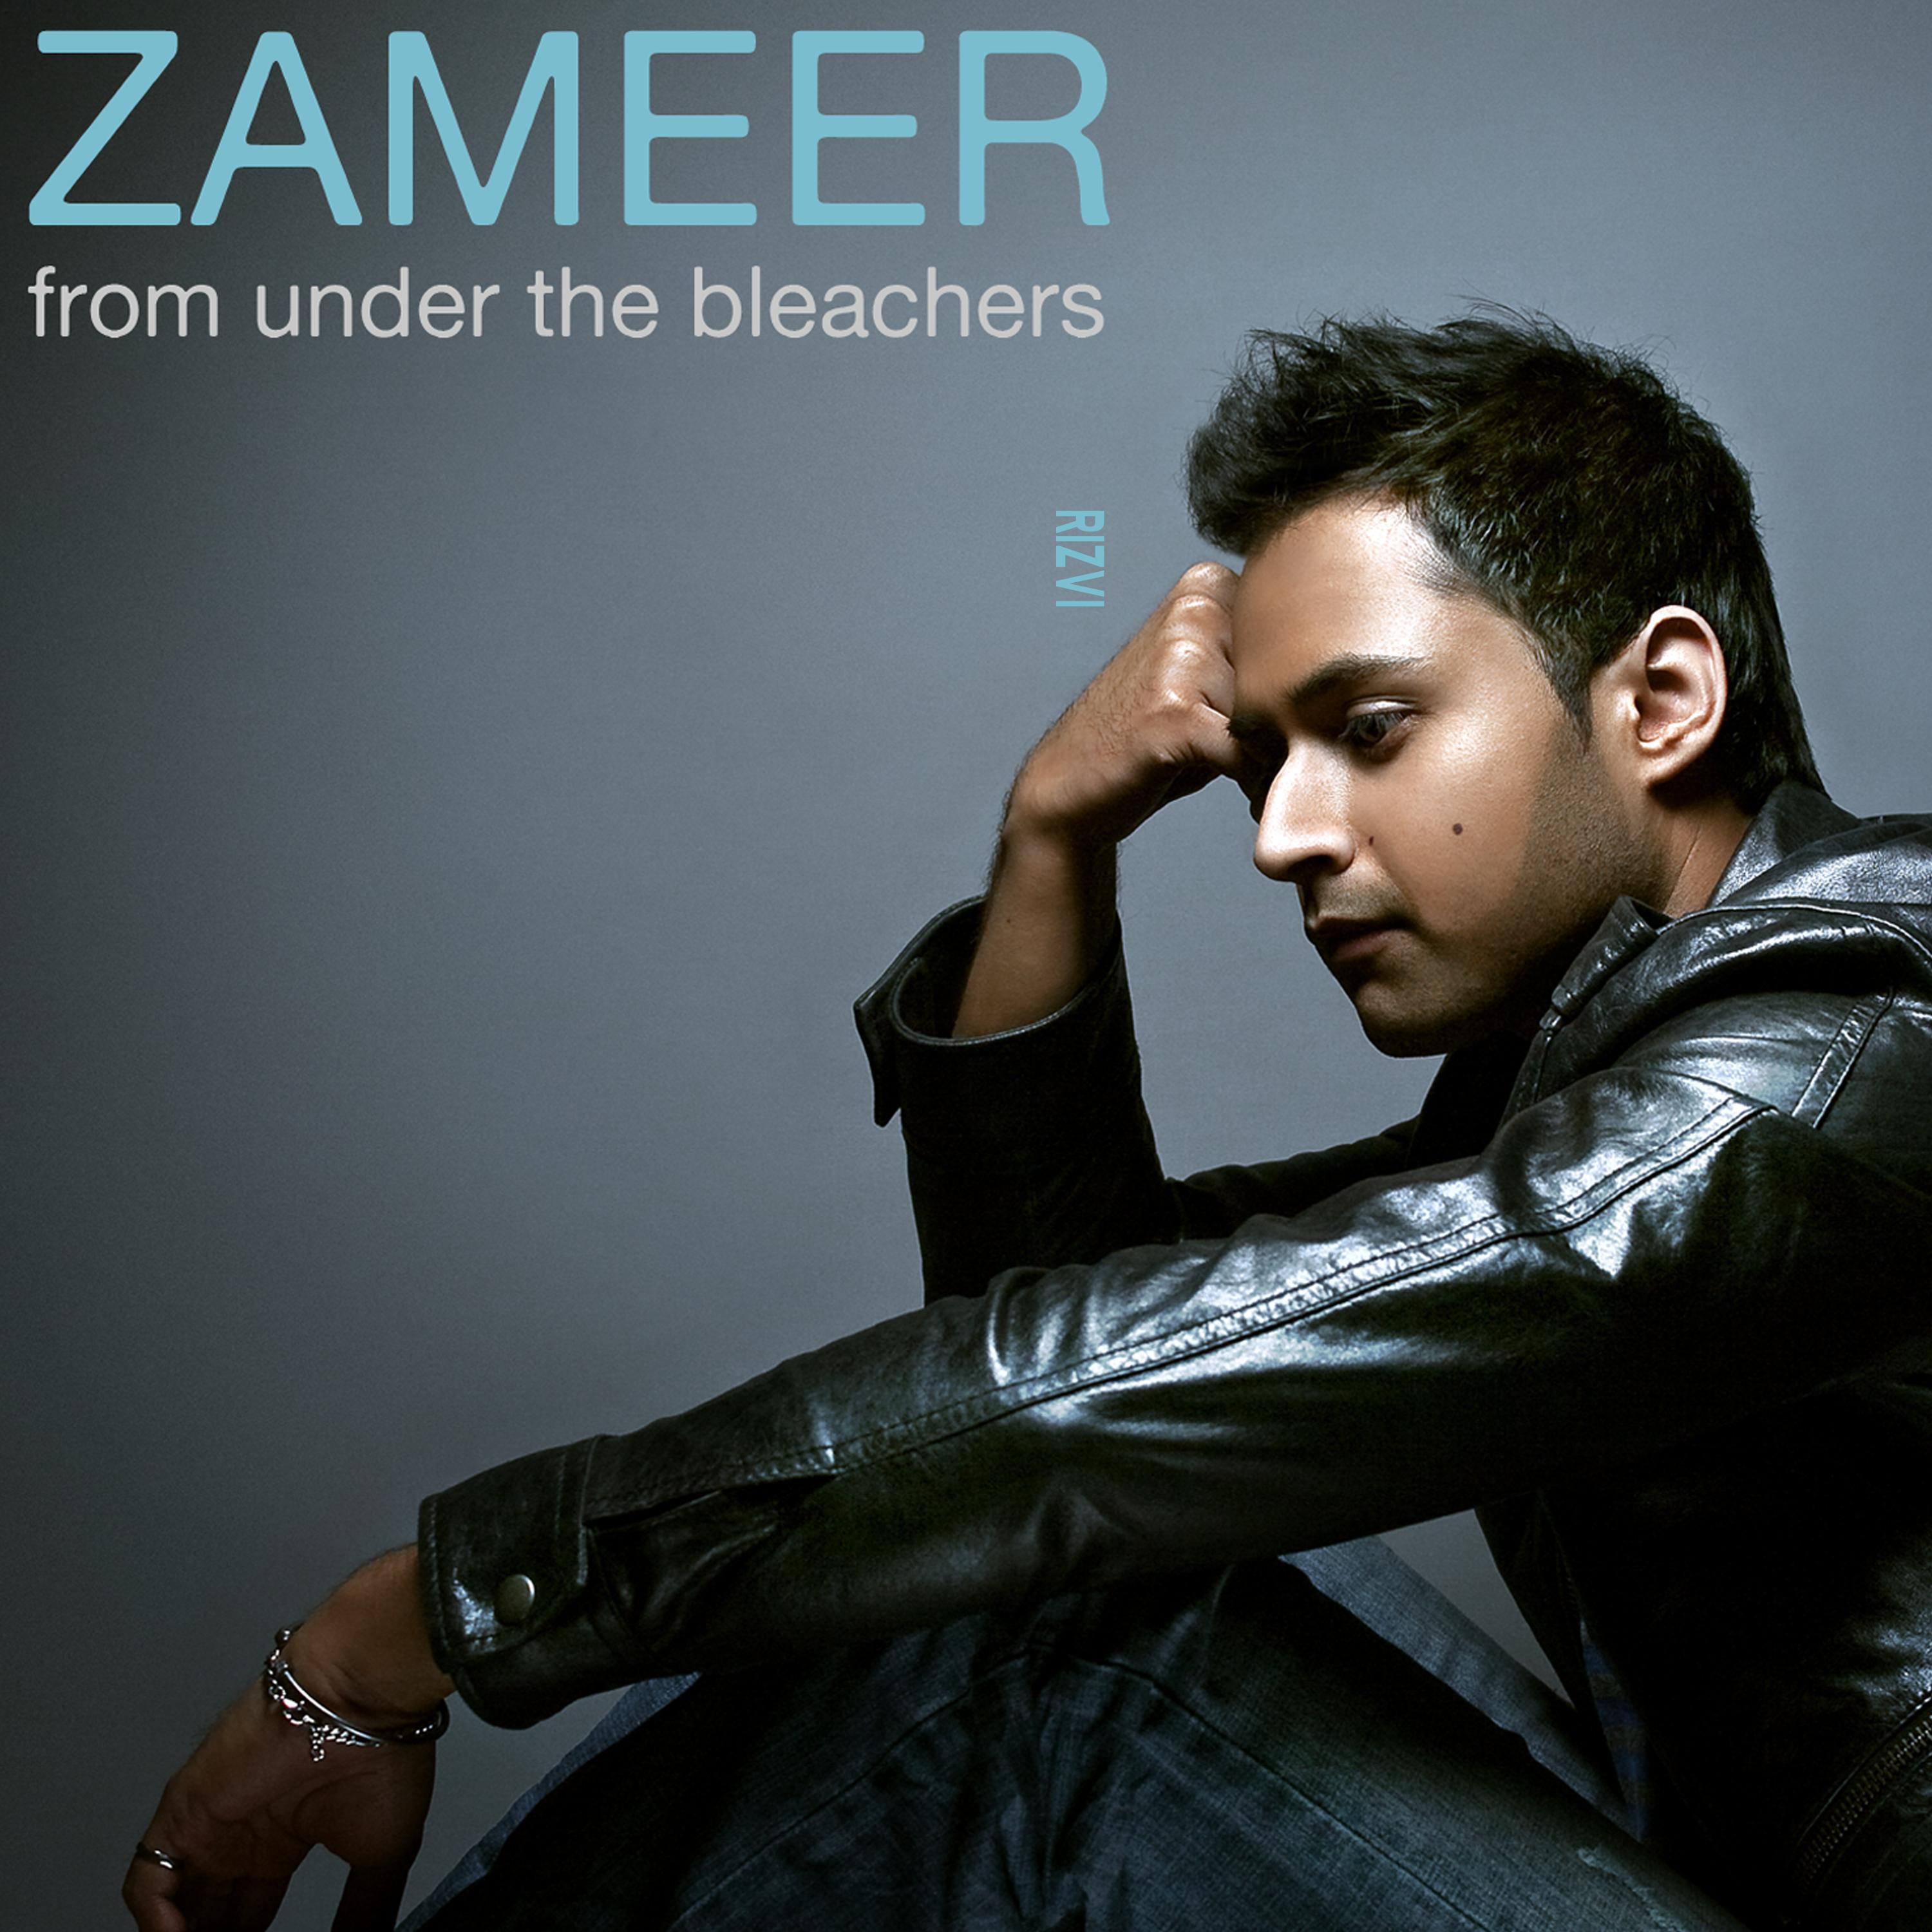 Zameer Rizvi - Glory of Love